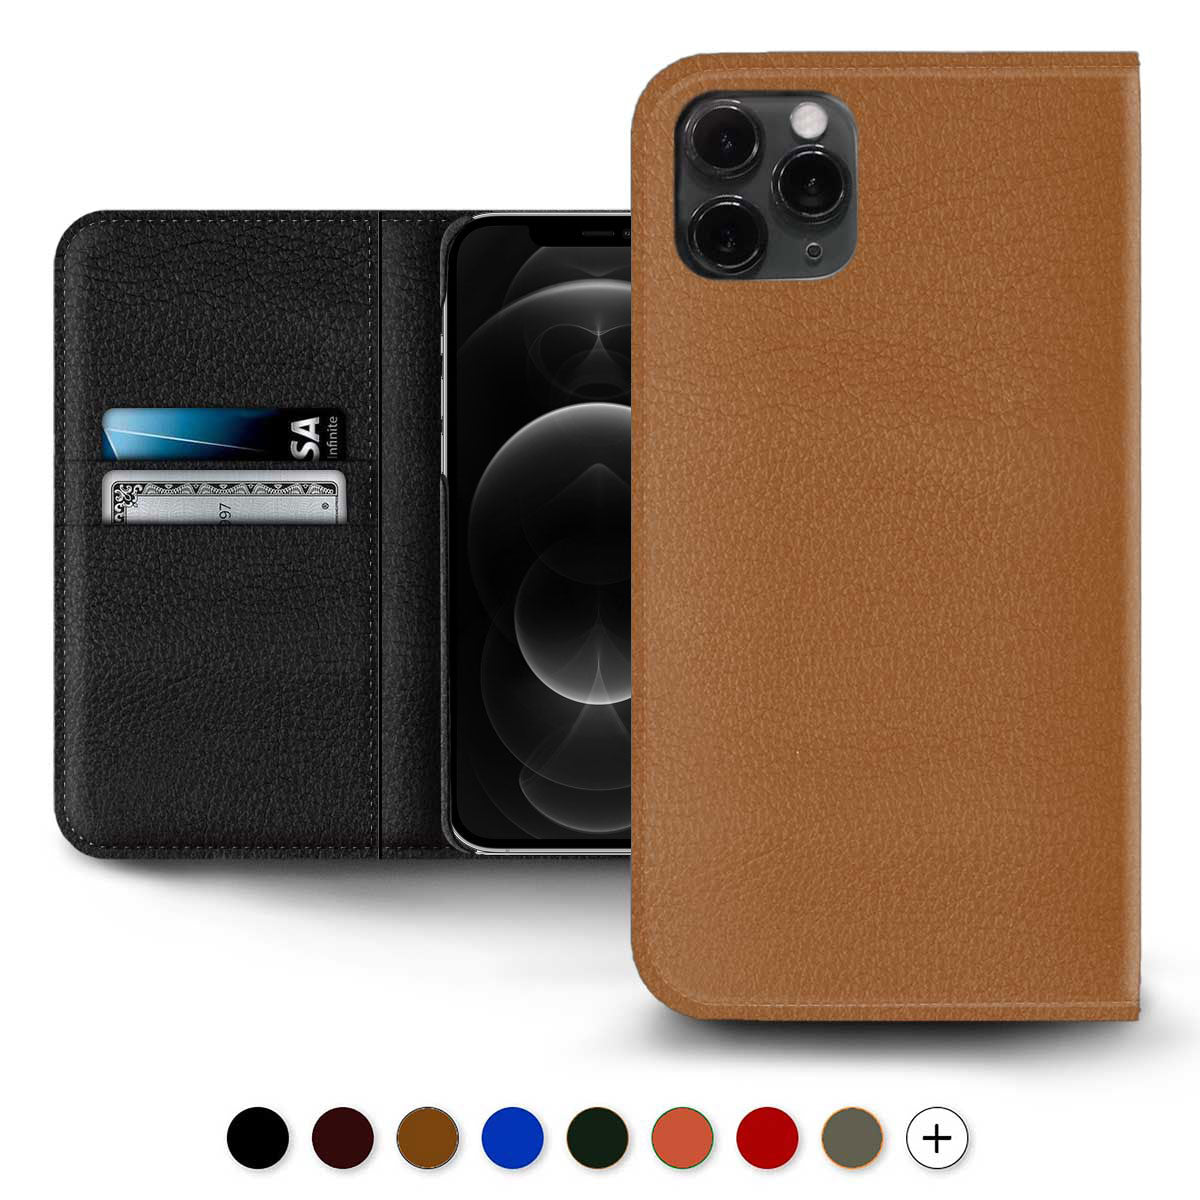 iPhone leather wallet sleeve / folio case - iPhone 12 & 11 ( Pro / Max / Mini ) - Buffalo leather ( Black, brown, blue, orange...)